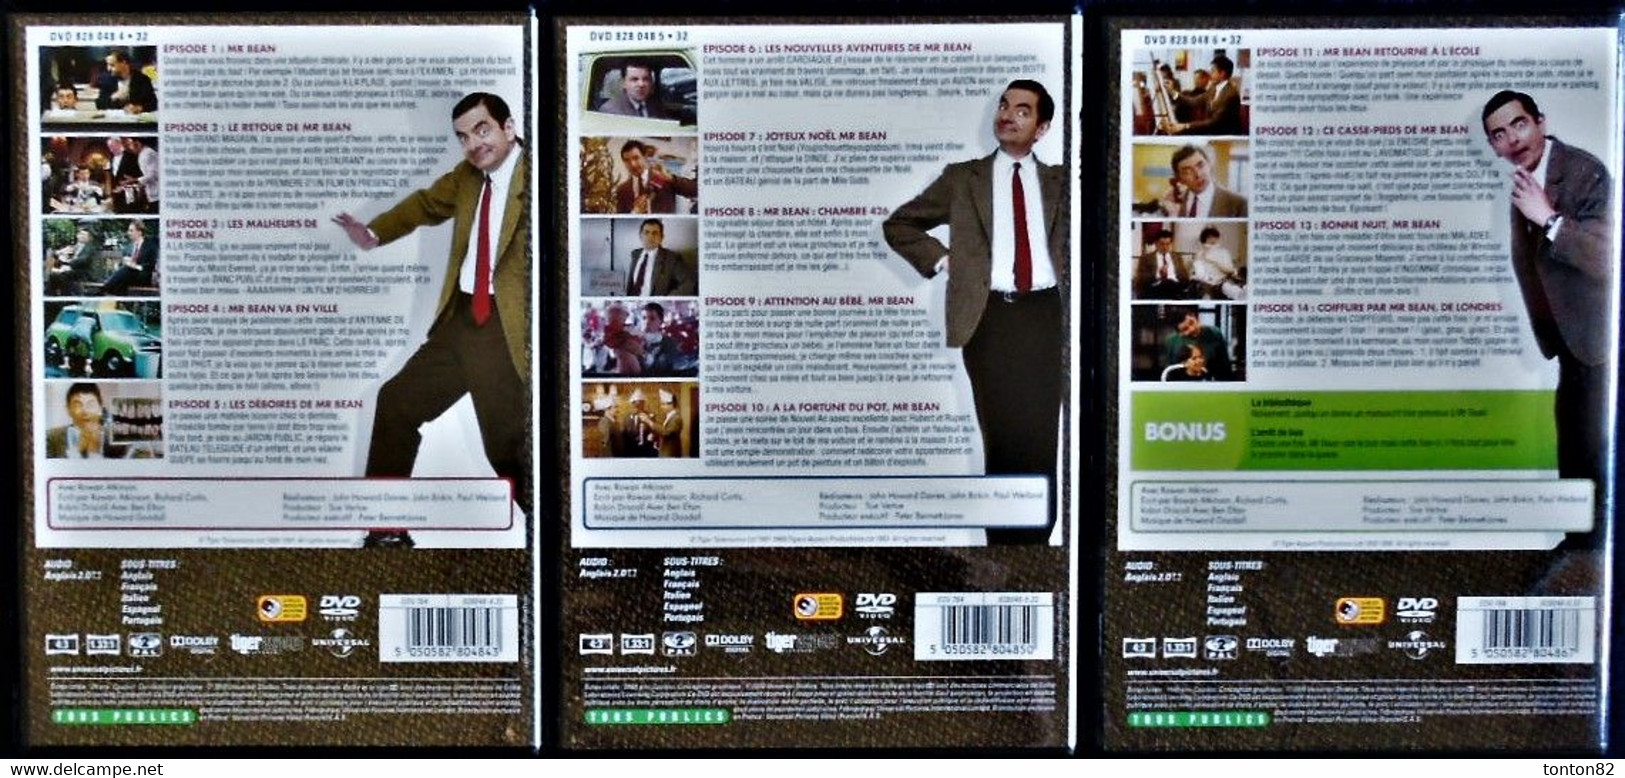 Rowan Atkinson - Mr BEAN ( Version Remastérisée ) -  3 DVD . - Comedy